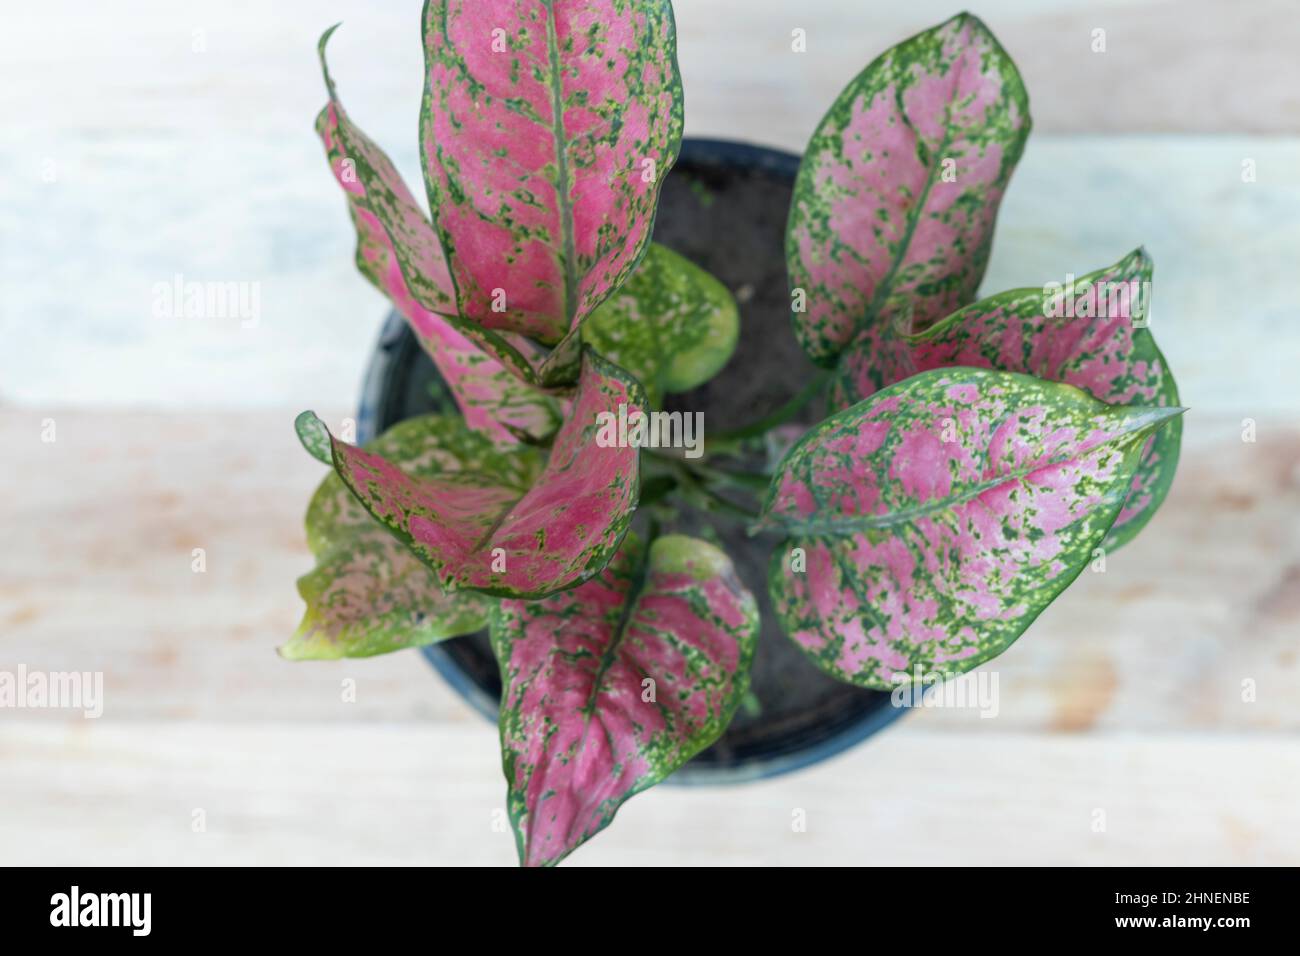 Aglaonema pink chinese evergreen plant Stock Photo